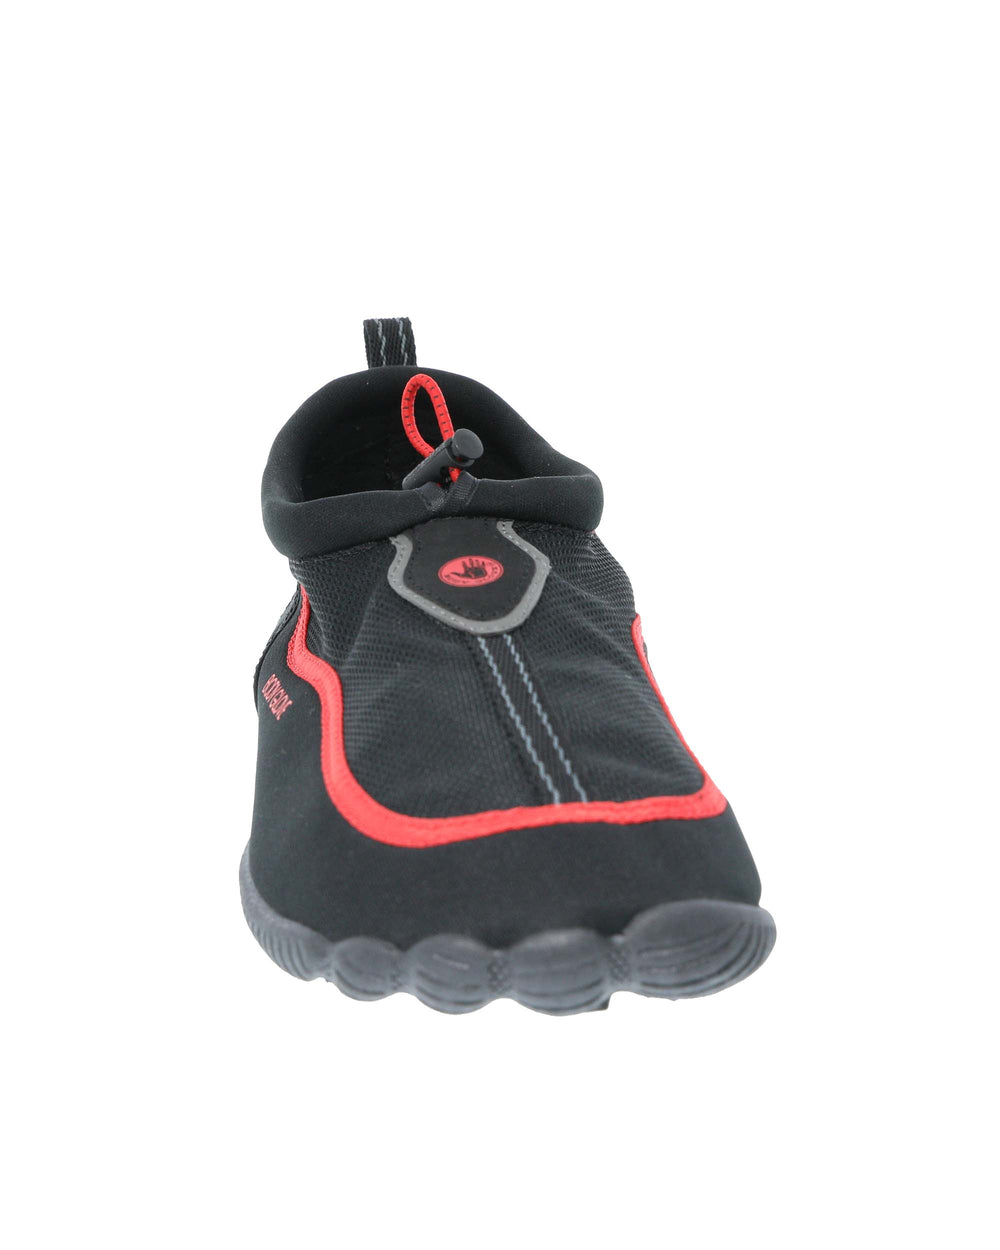 Men's Riverbreaker Water Shoes - Black/Red